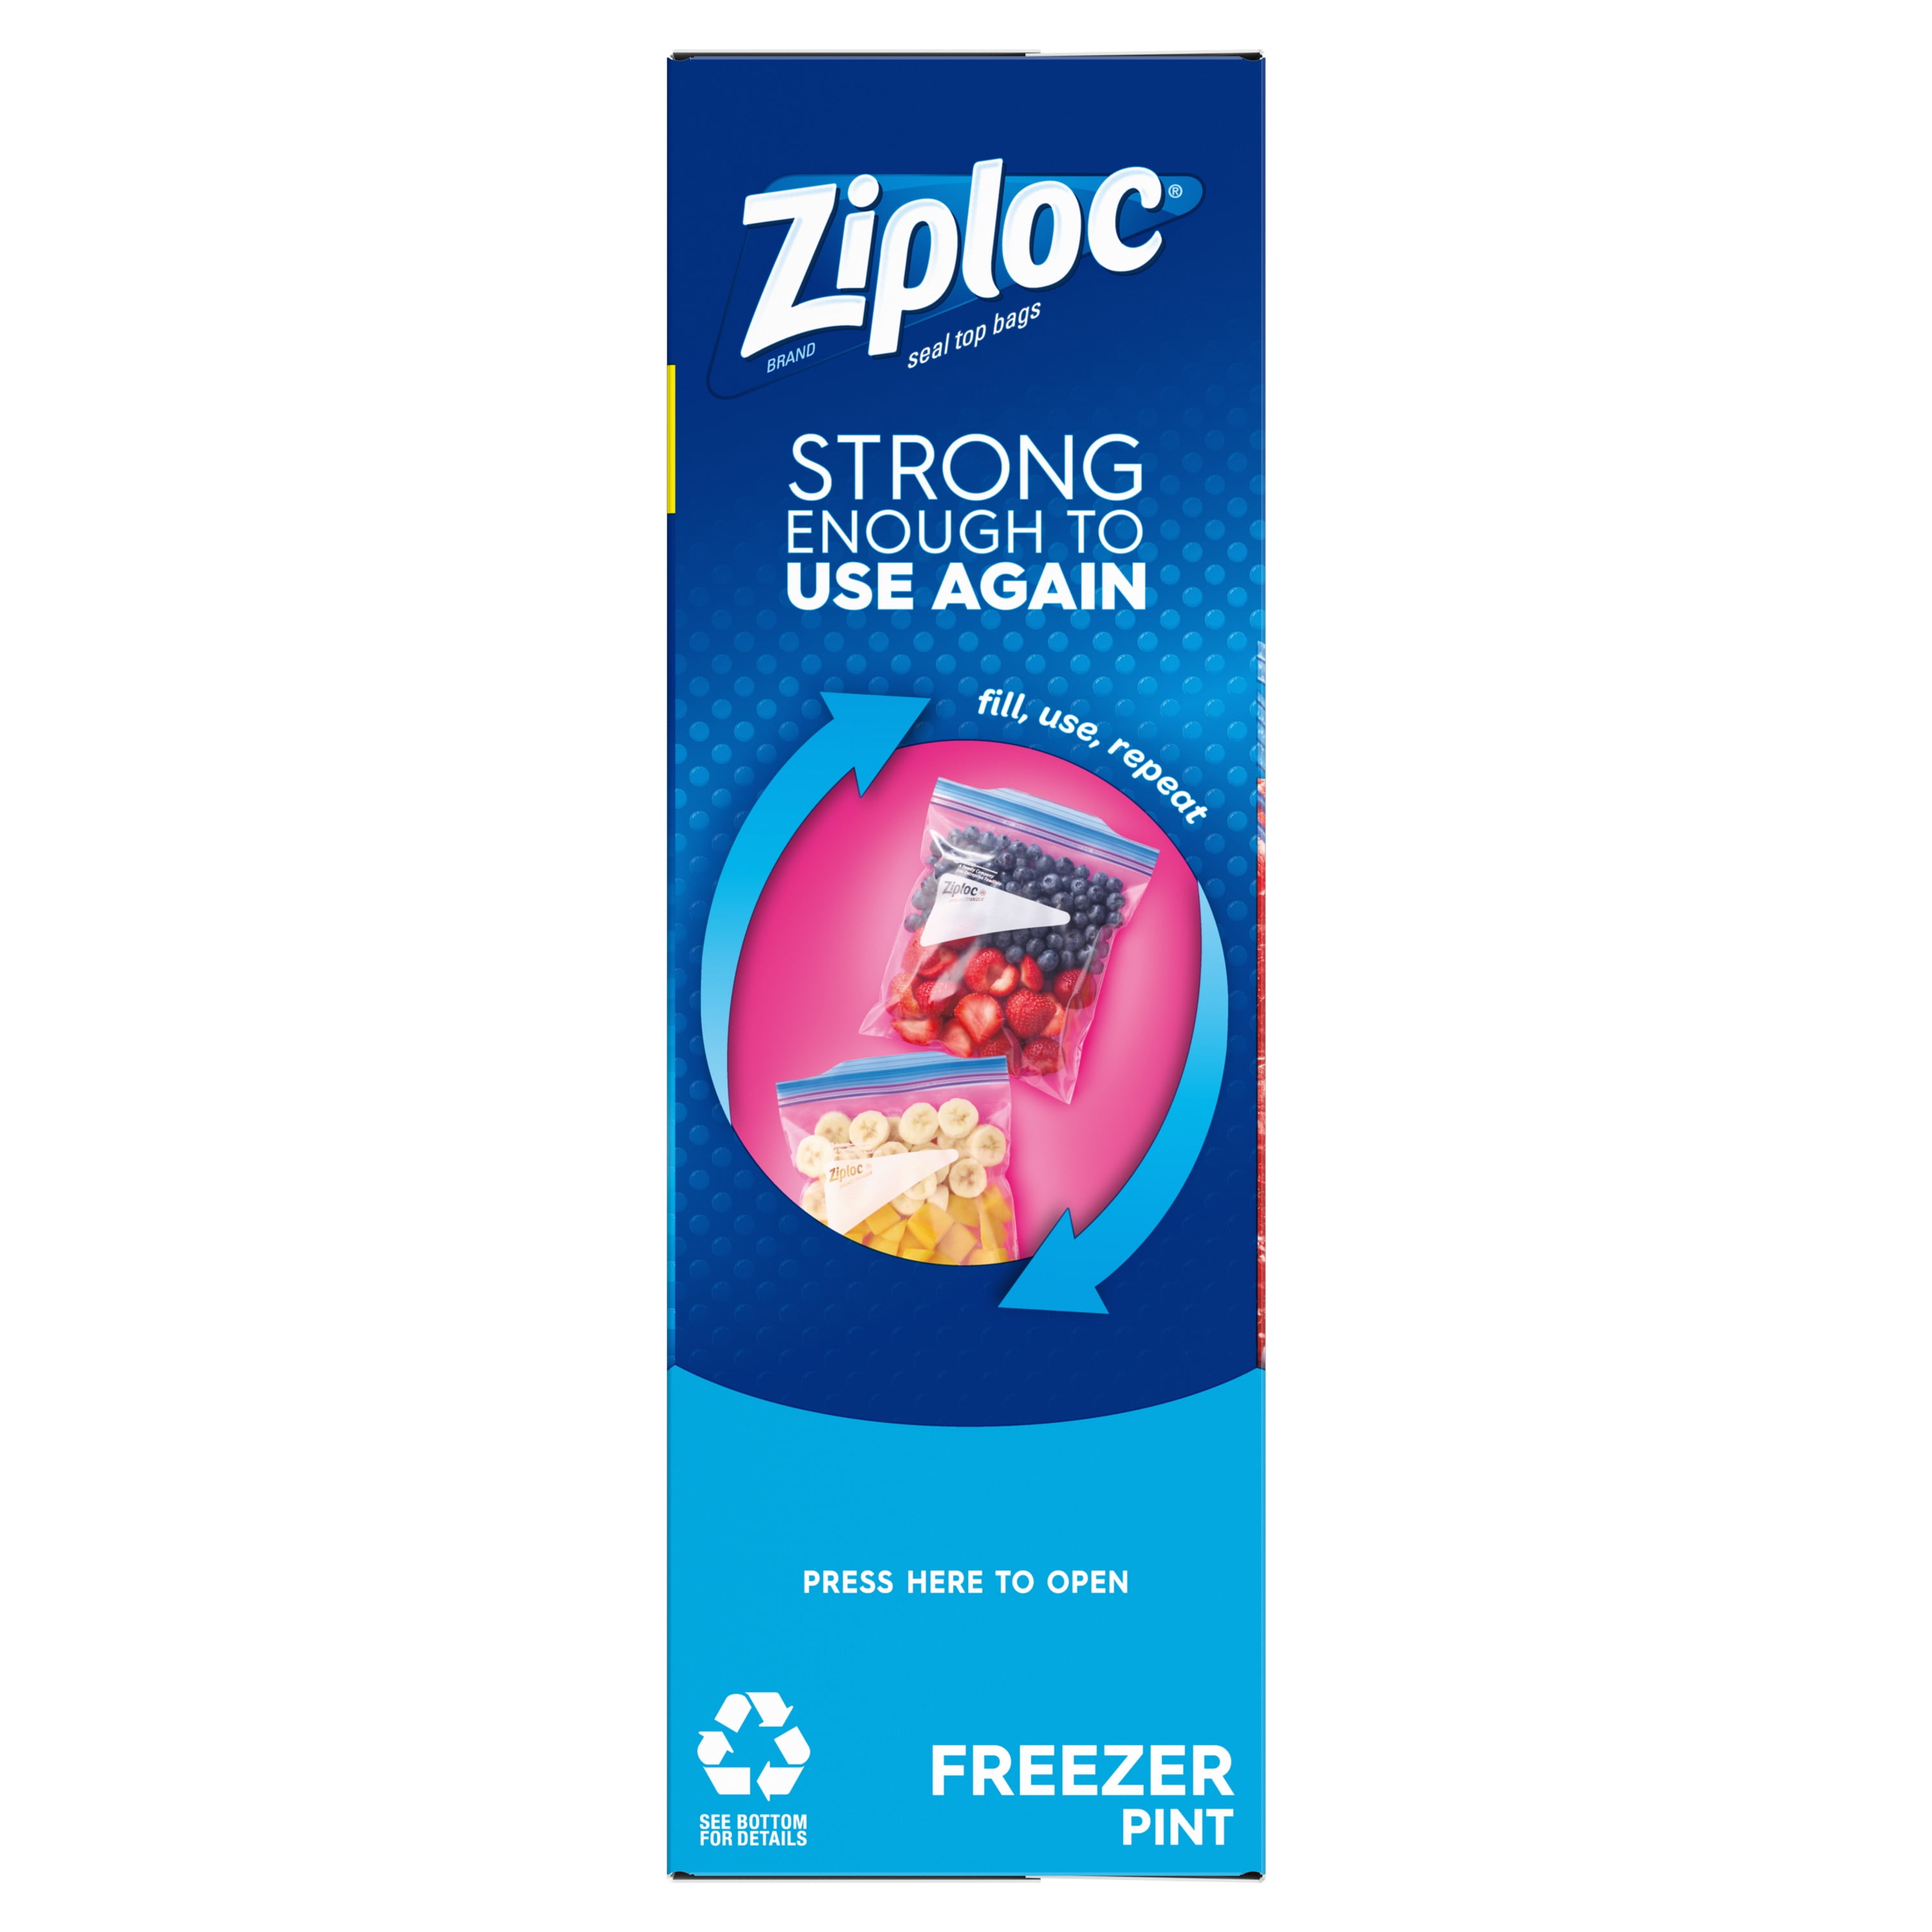 Ziploc Freezer Pint Bag, Grip 'n Seal Technology, Reusable, 20 Count 